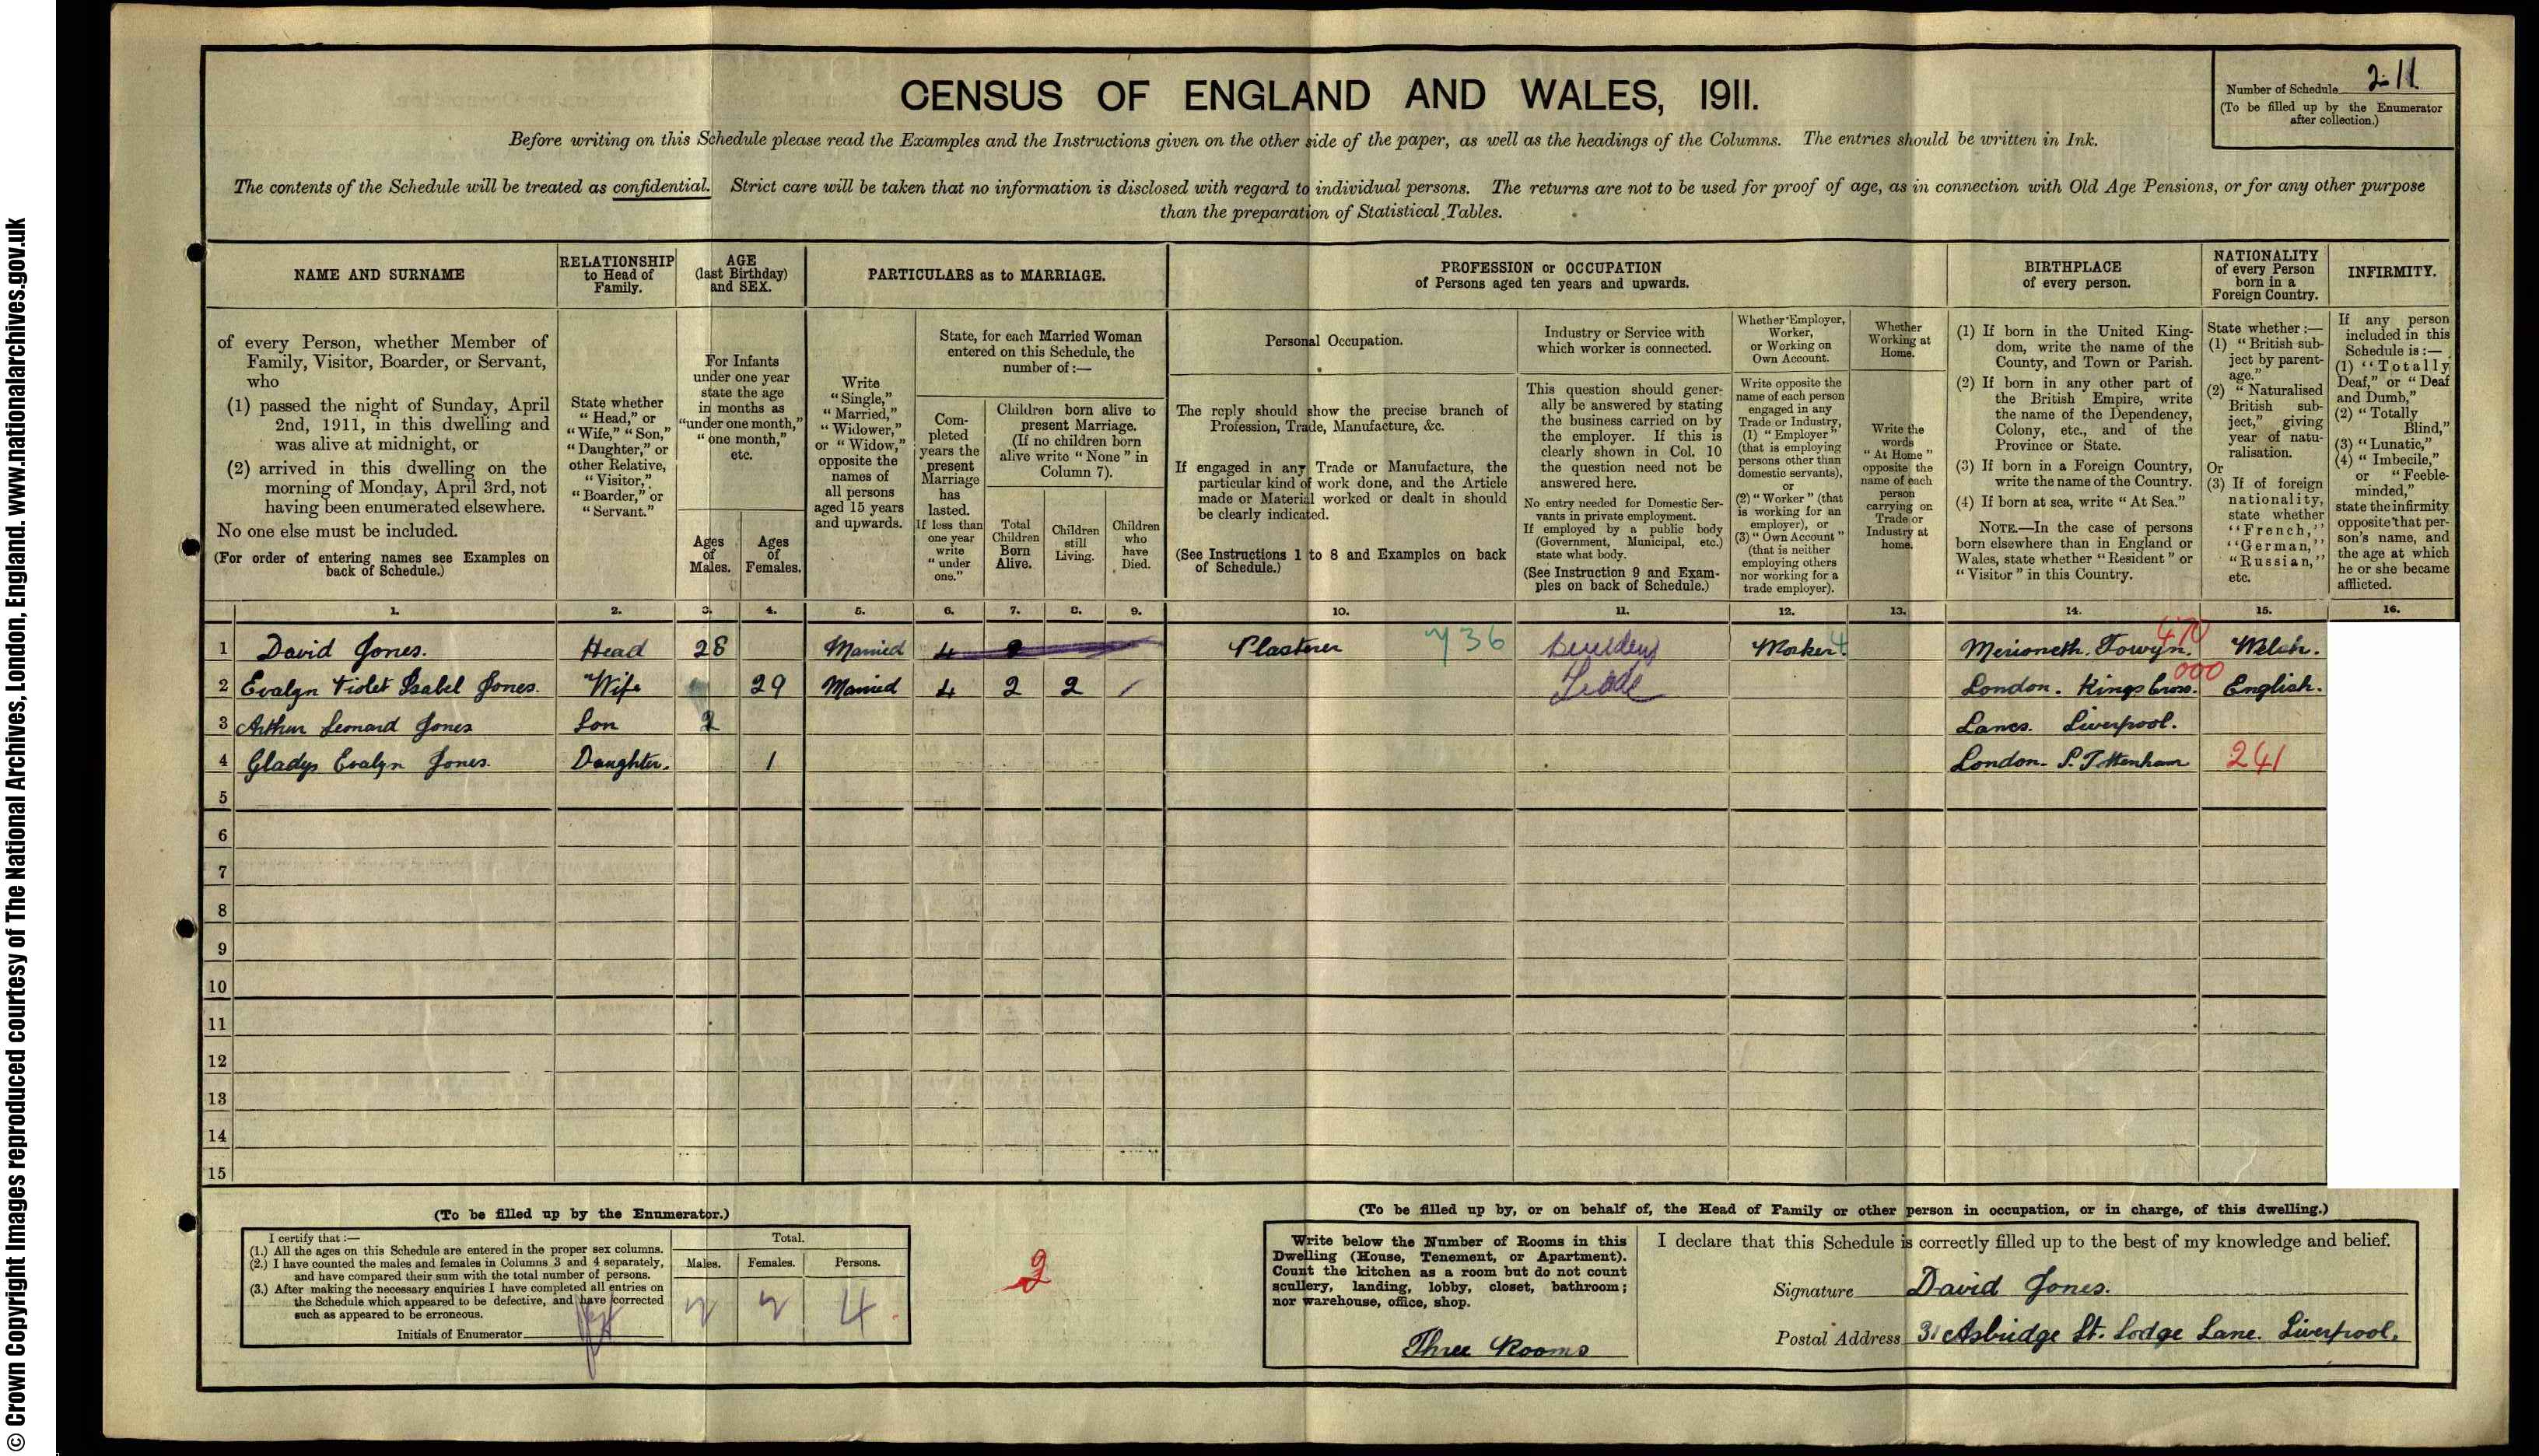 1911: 31  Asbridge St Liverpool, Lancashire